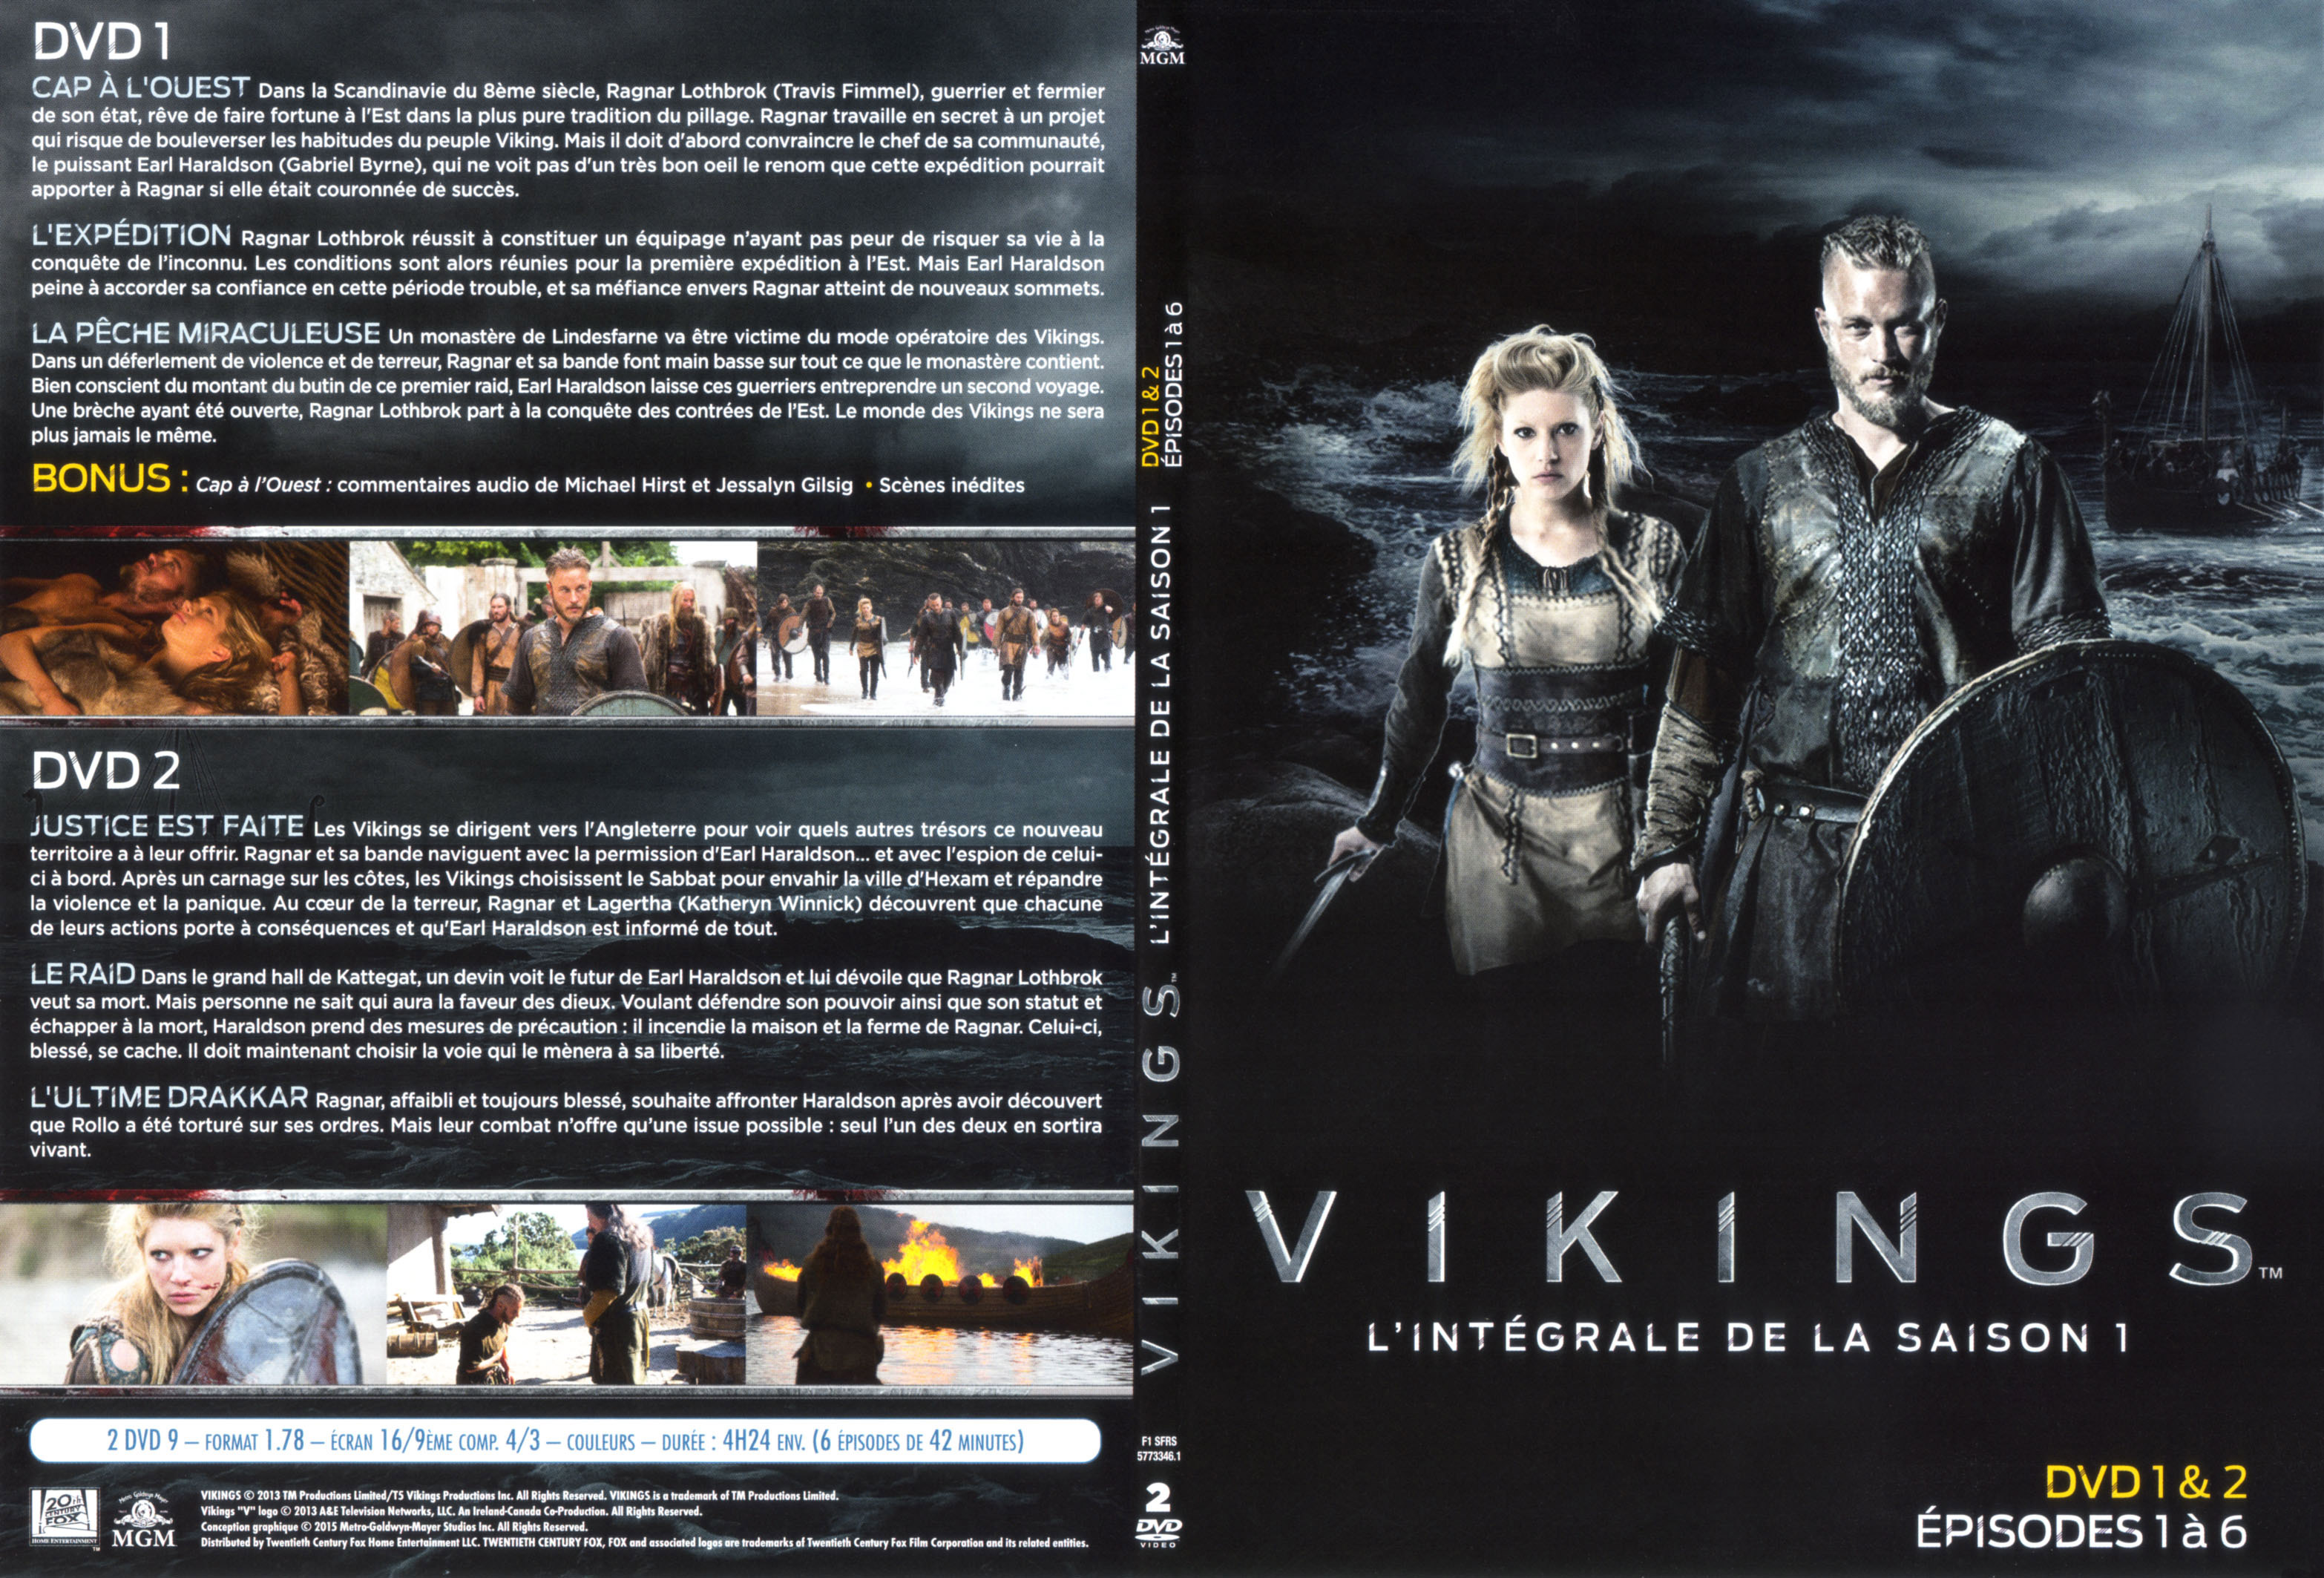 Jaquette DVD Vikings Saison 1 DVD 1